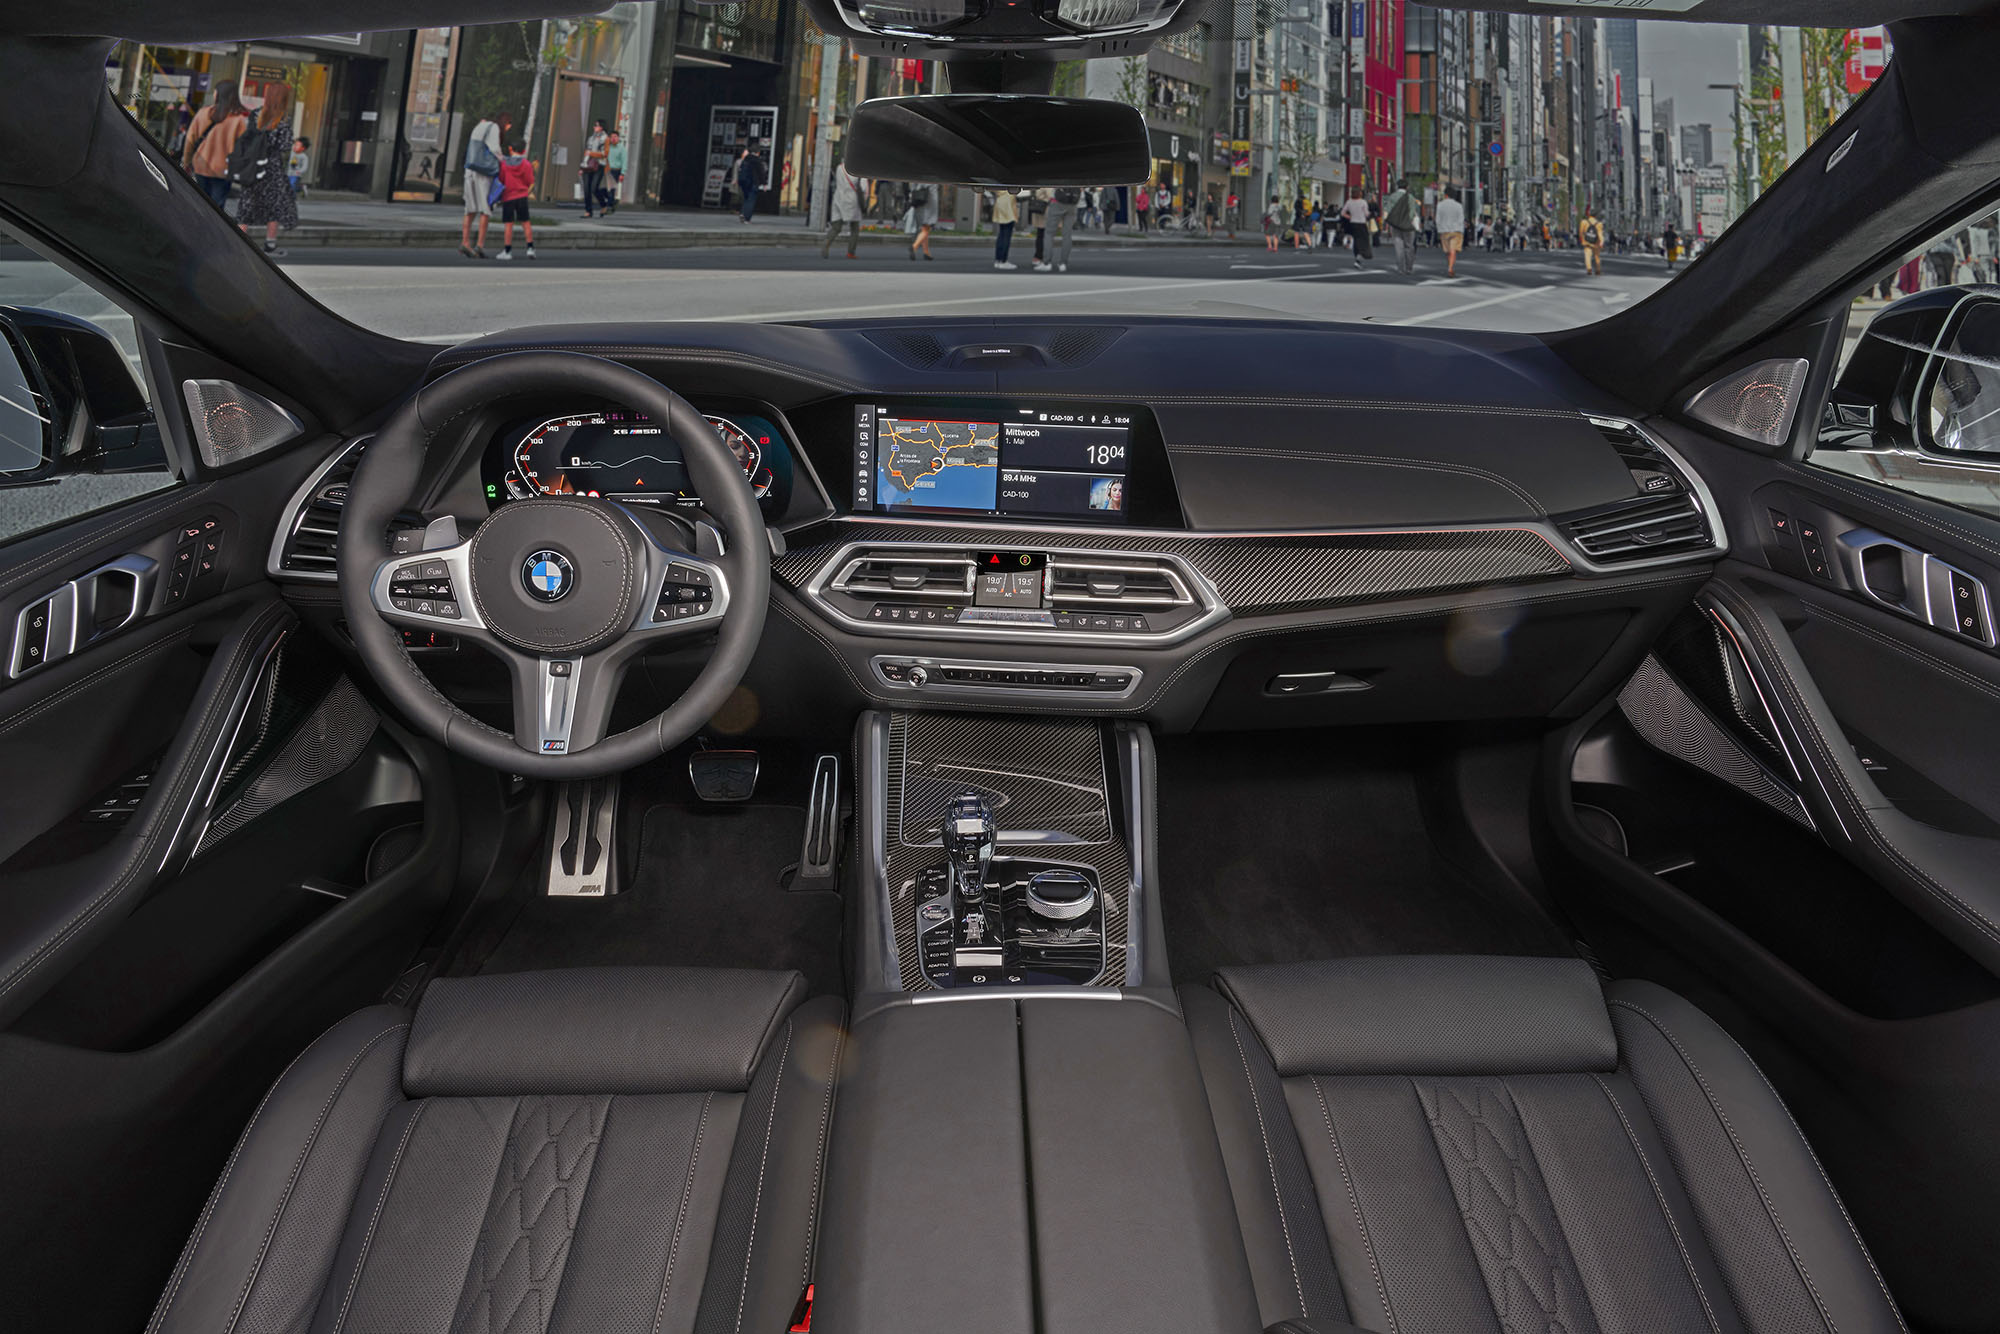  BMW X6 interior in black